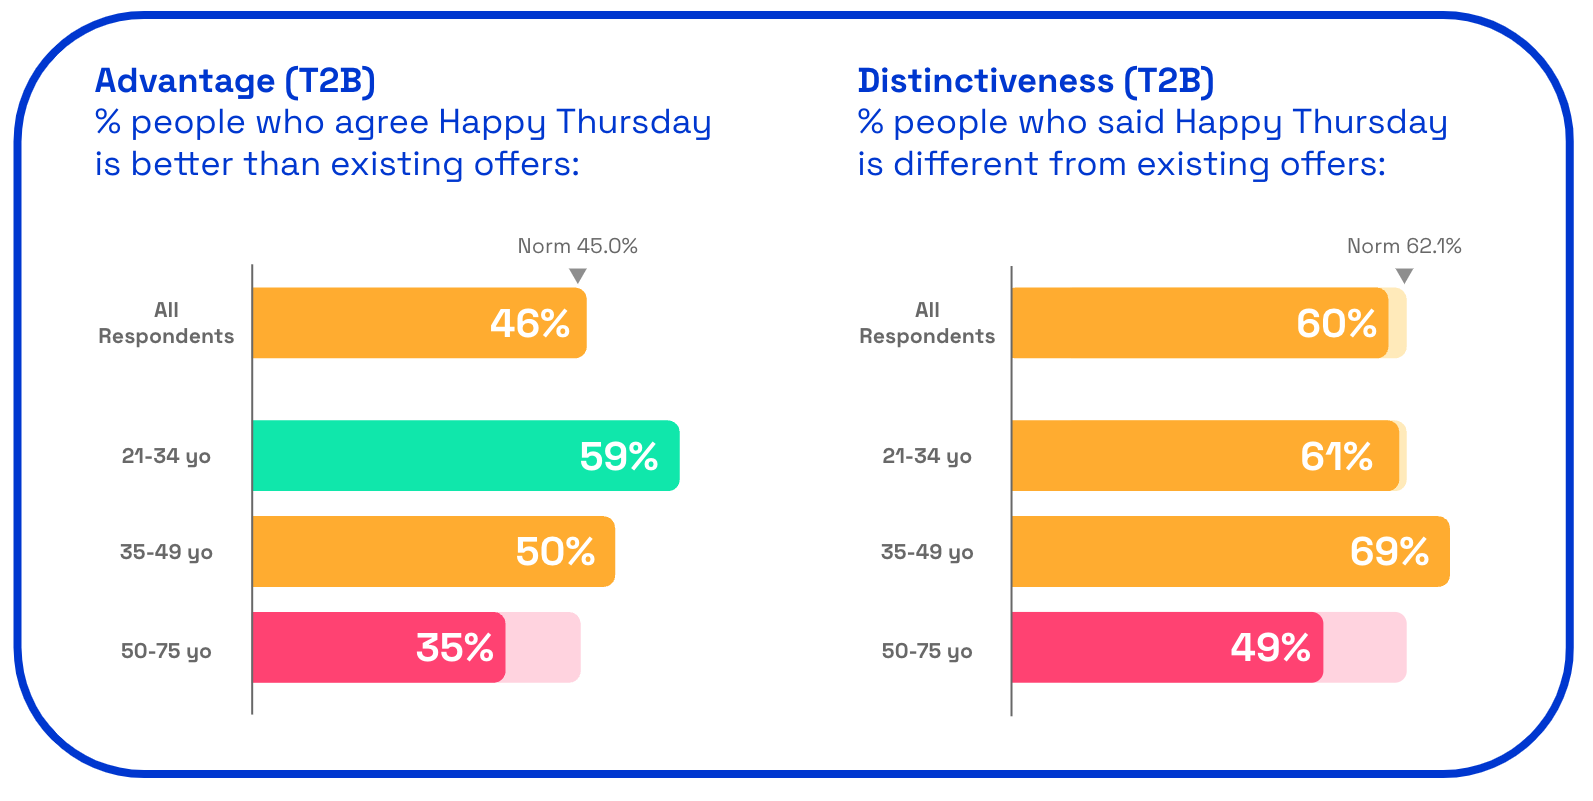 Happy Thursday advantage and distinctiveness scores